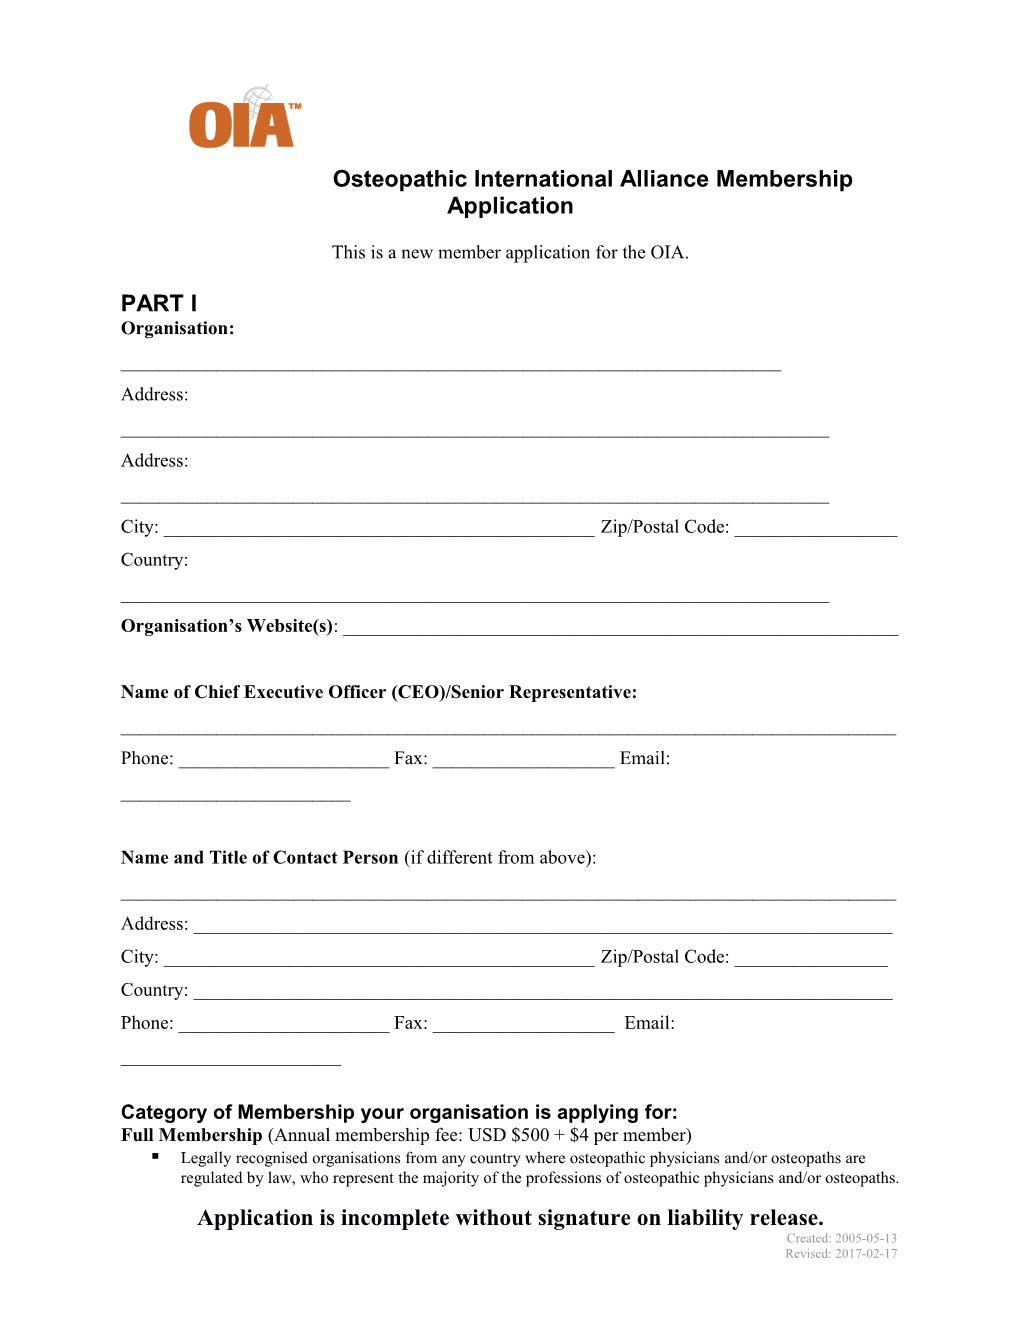 Osteopathic International Alliance Membership Application